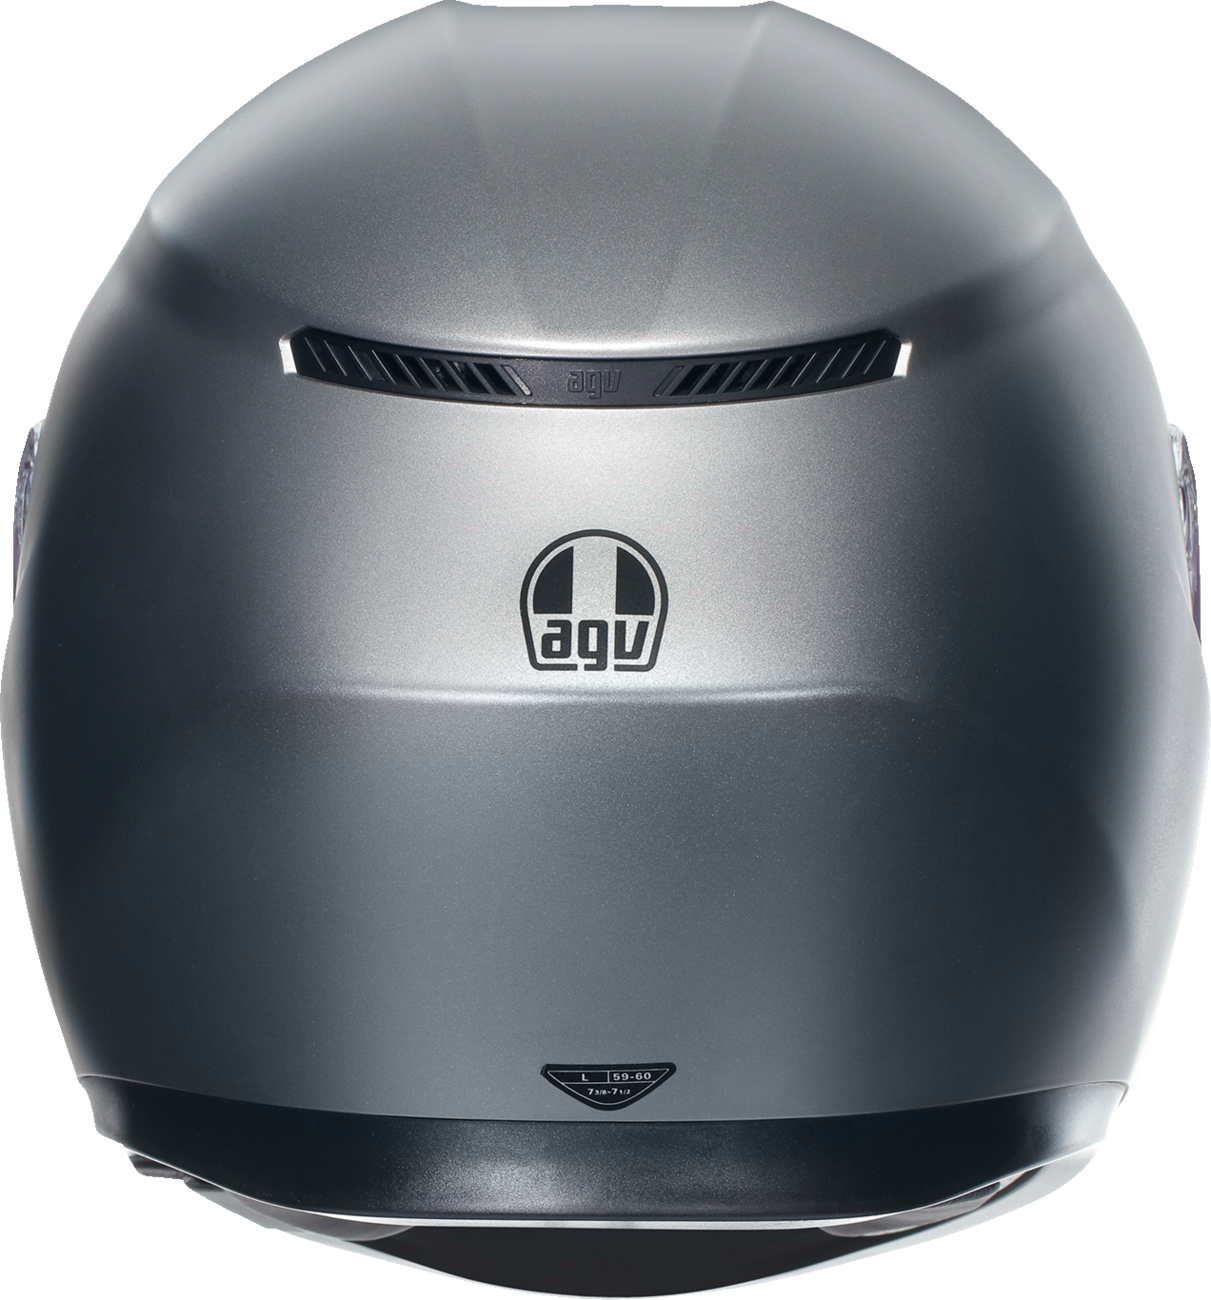 AGV K3 Helmet - Matte Rodio Gray - Large 2118381004006L